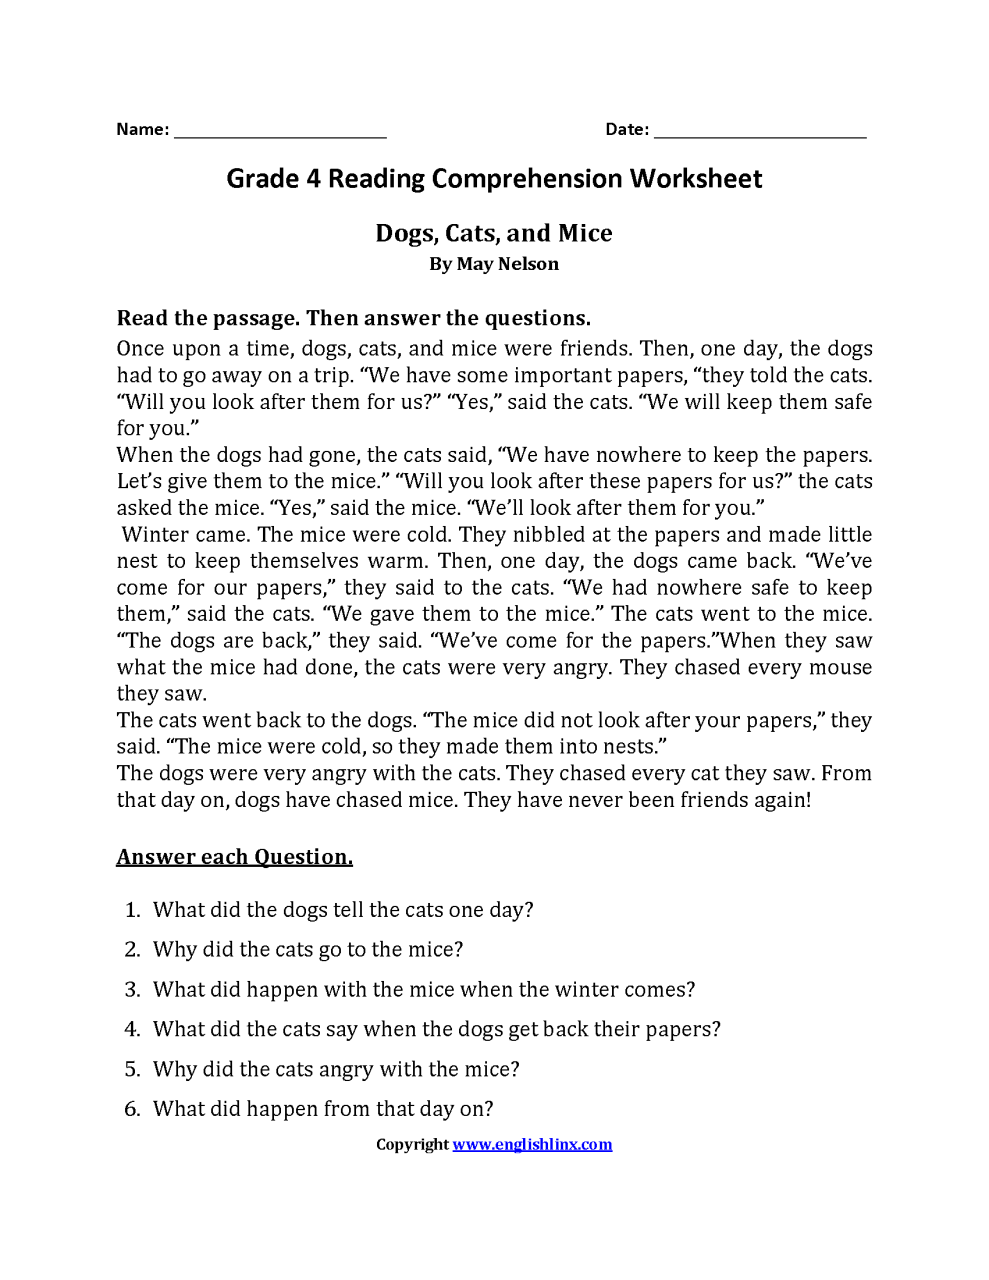 Writing Practice Sheets For Preschoolers